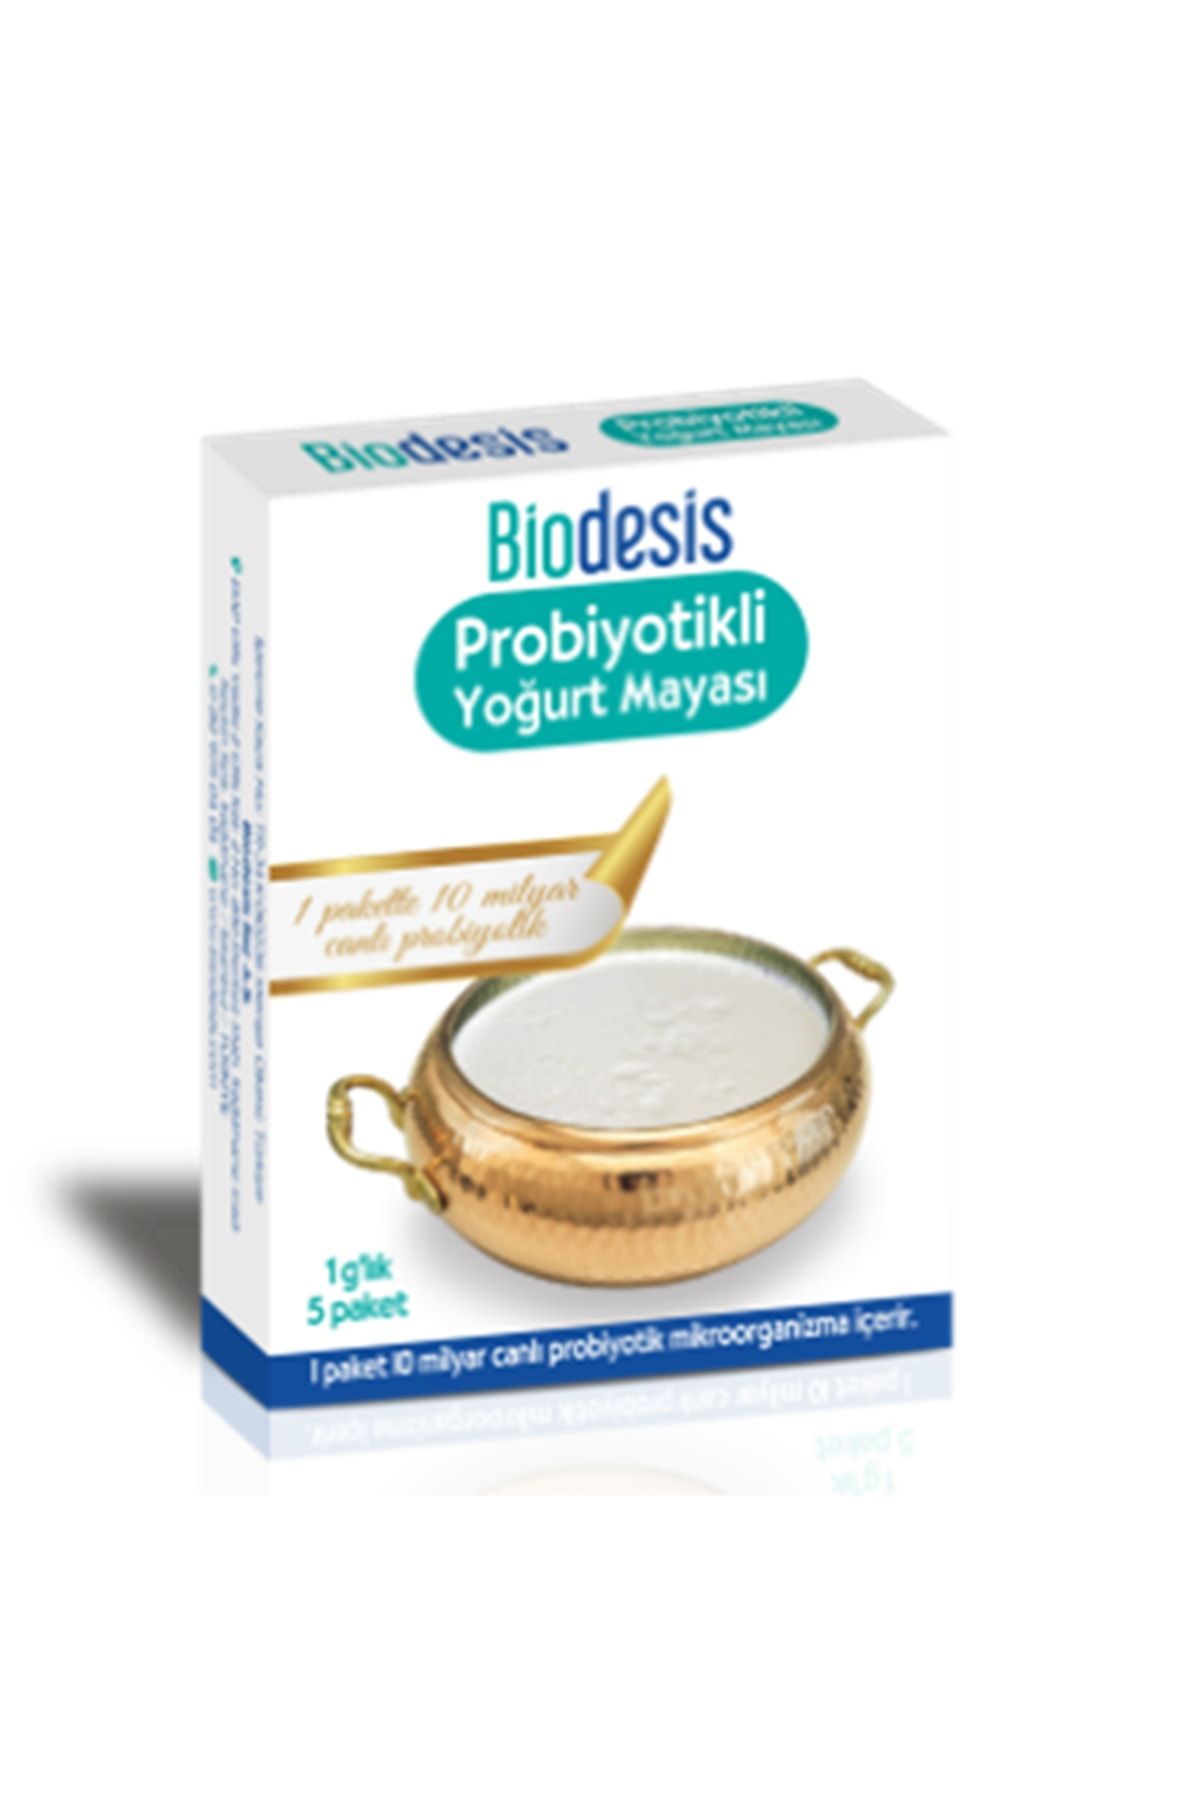 Biodesis Probiyotikli Yoğurt Mayası 1gr X 5 Paket